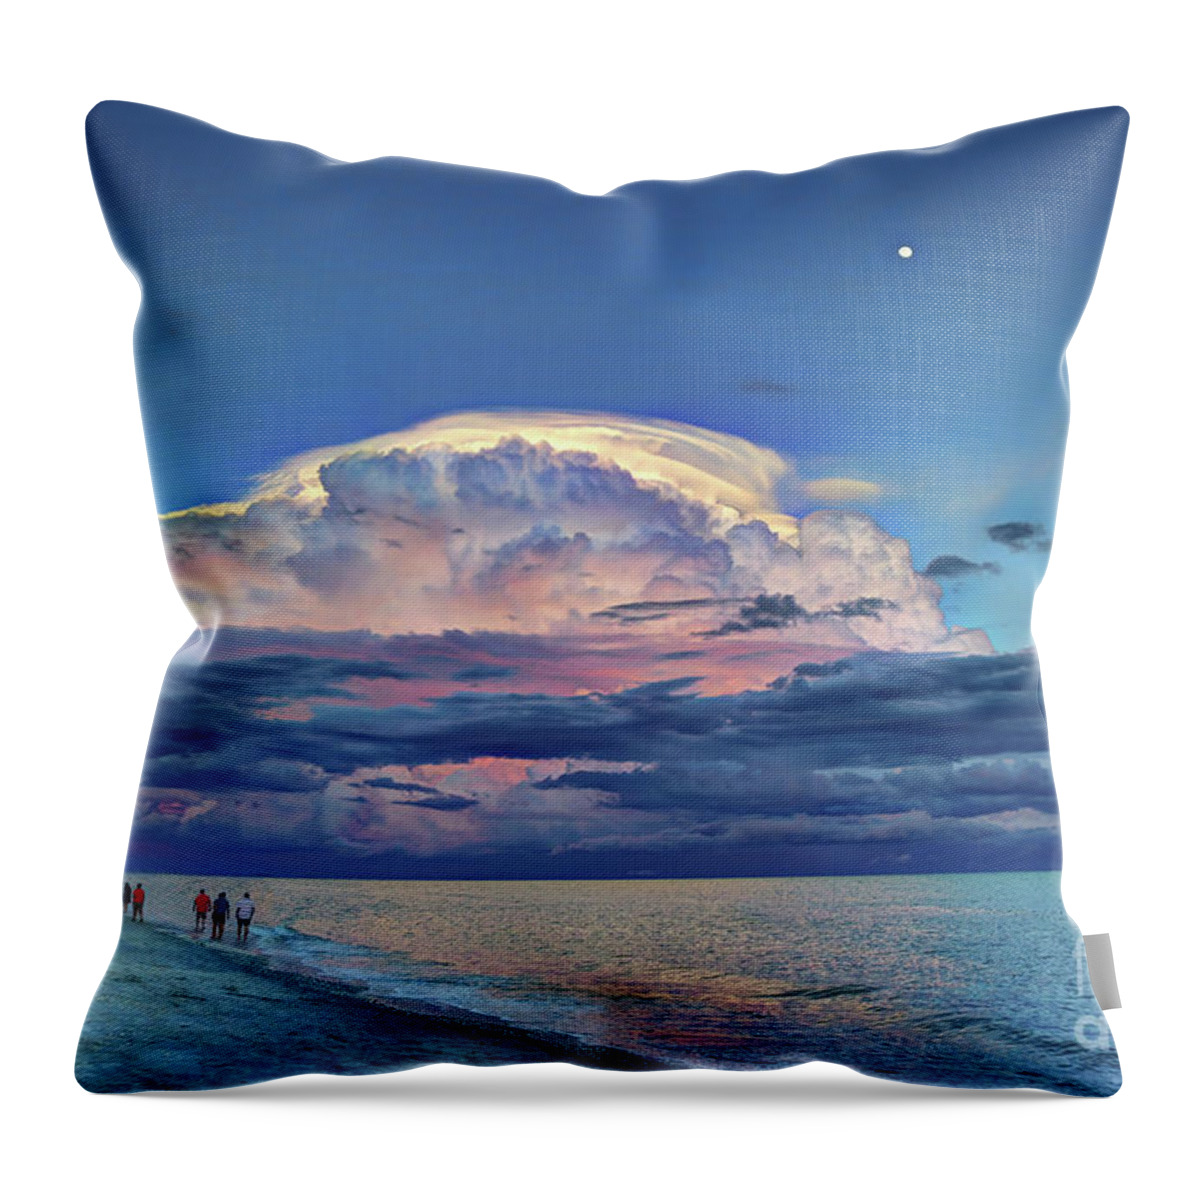 Sanibel Island Throw Pillow featuring the photograph Sunset Over Sanibel Island by Jeff Breiman